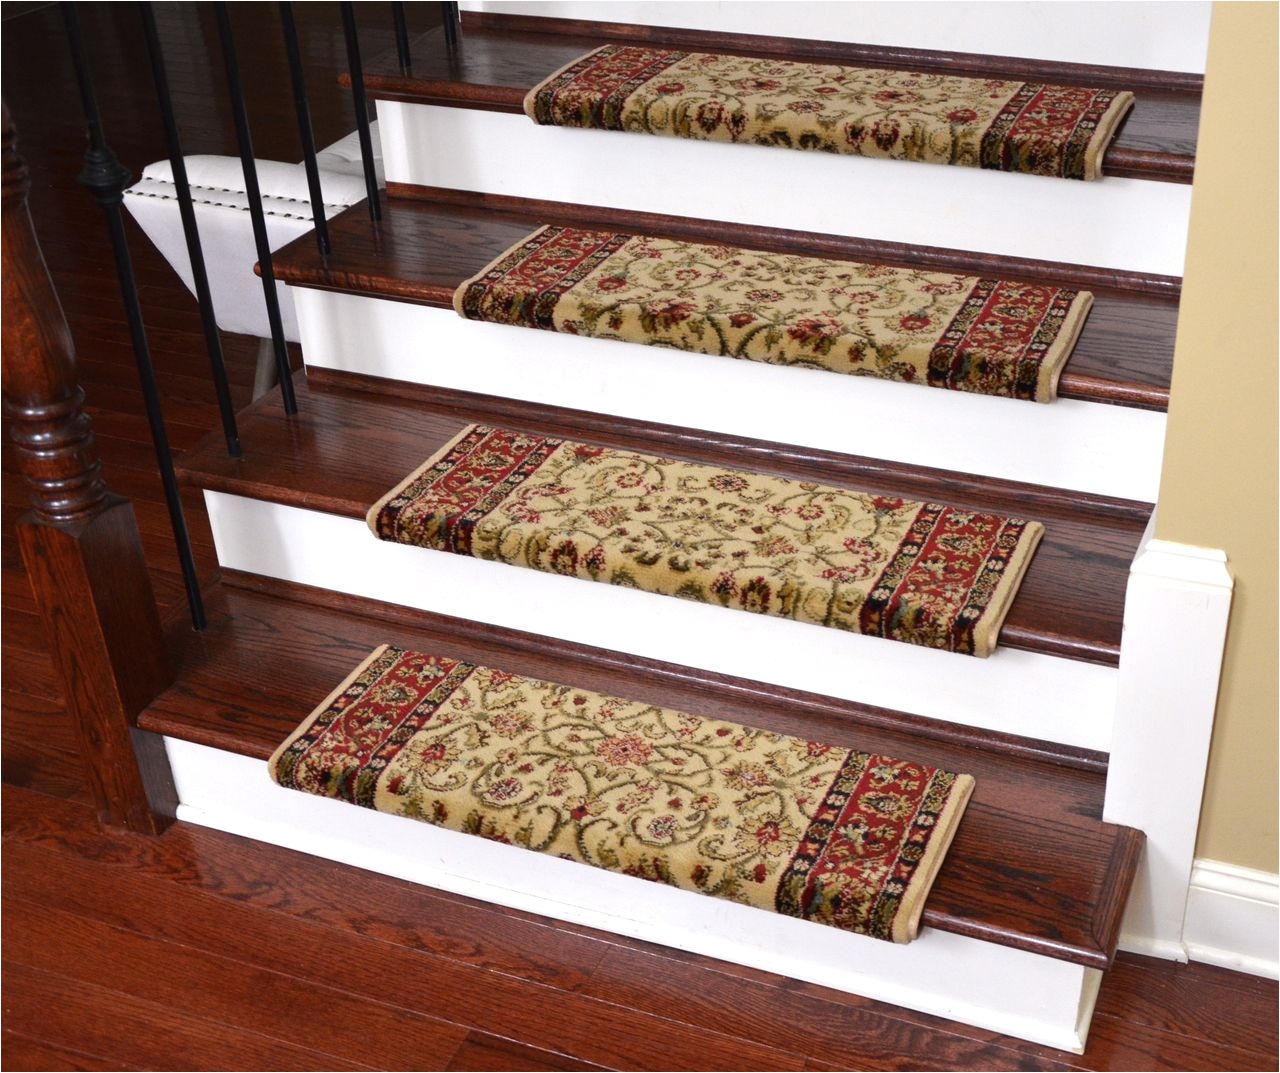 dean non slip tape free pet friendly stair gripper bullnose carpet stair treads classic